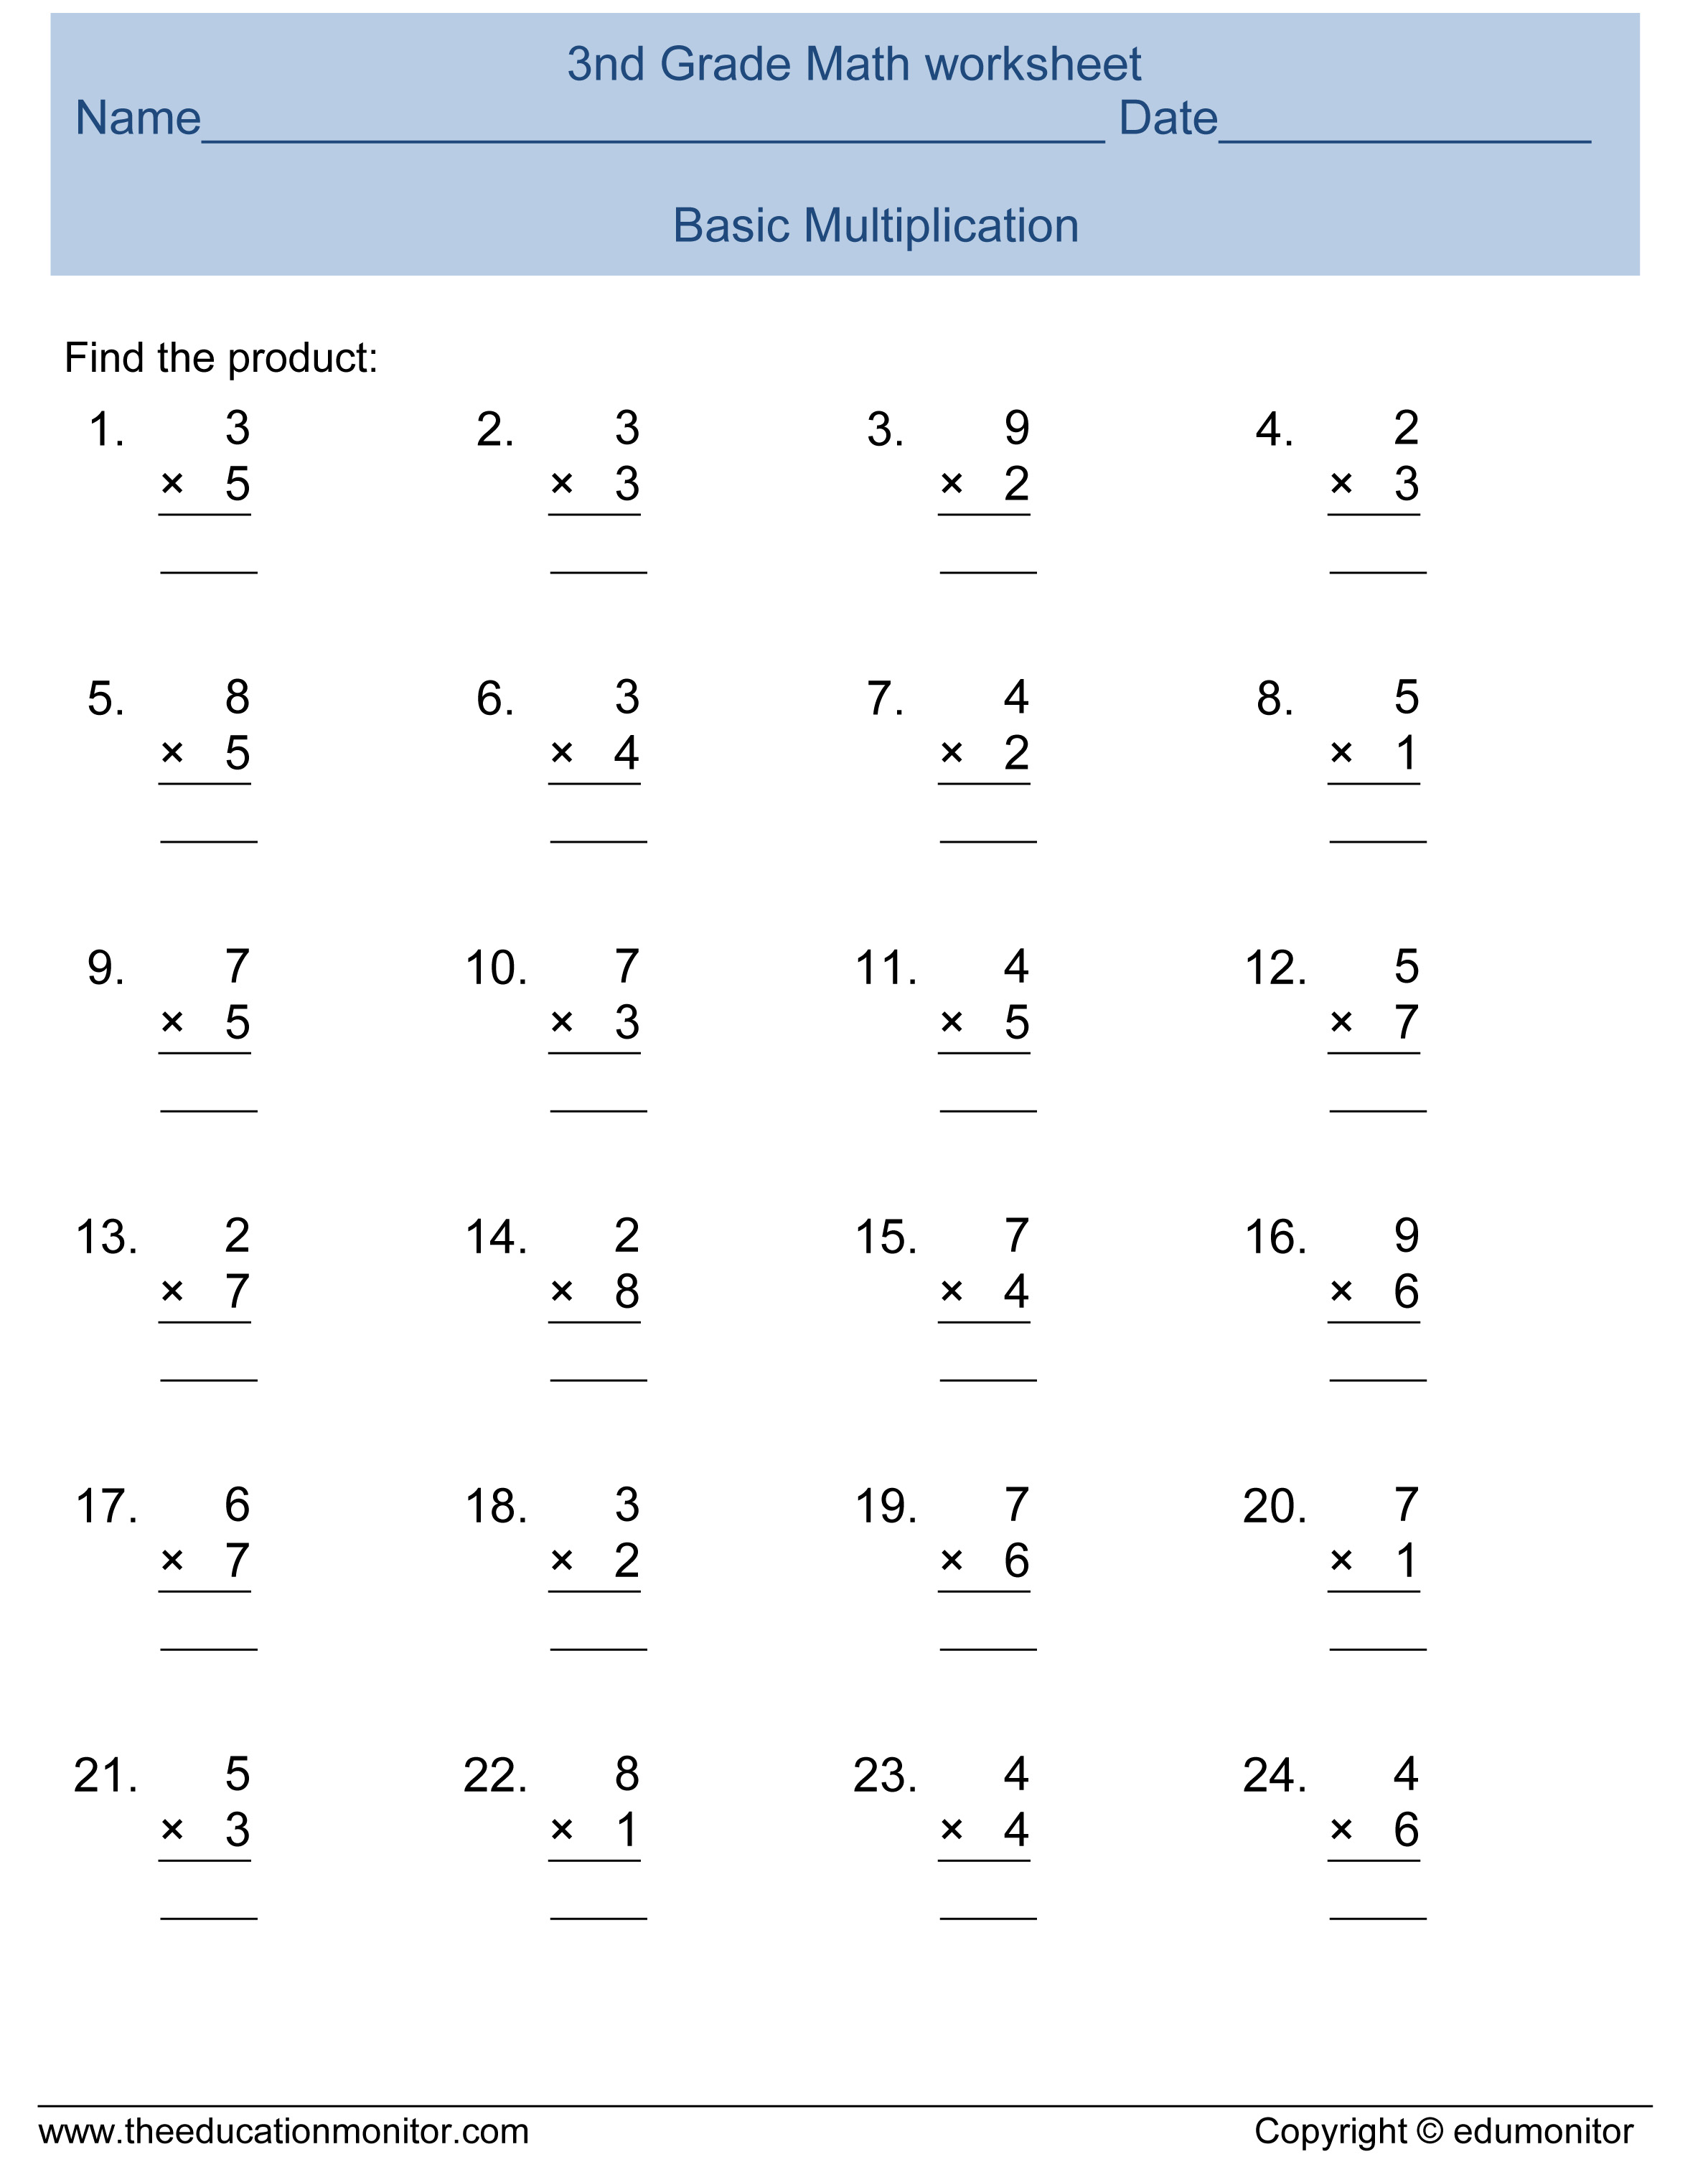 printables-super-teacher-worksheets-3rd-grade-tempojs-thousands-of-printable-activities